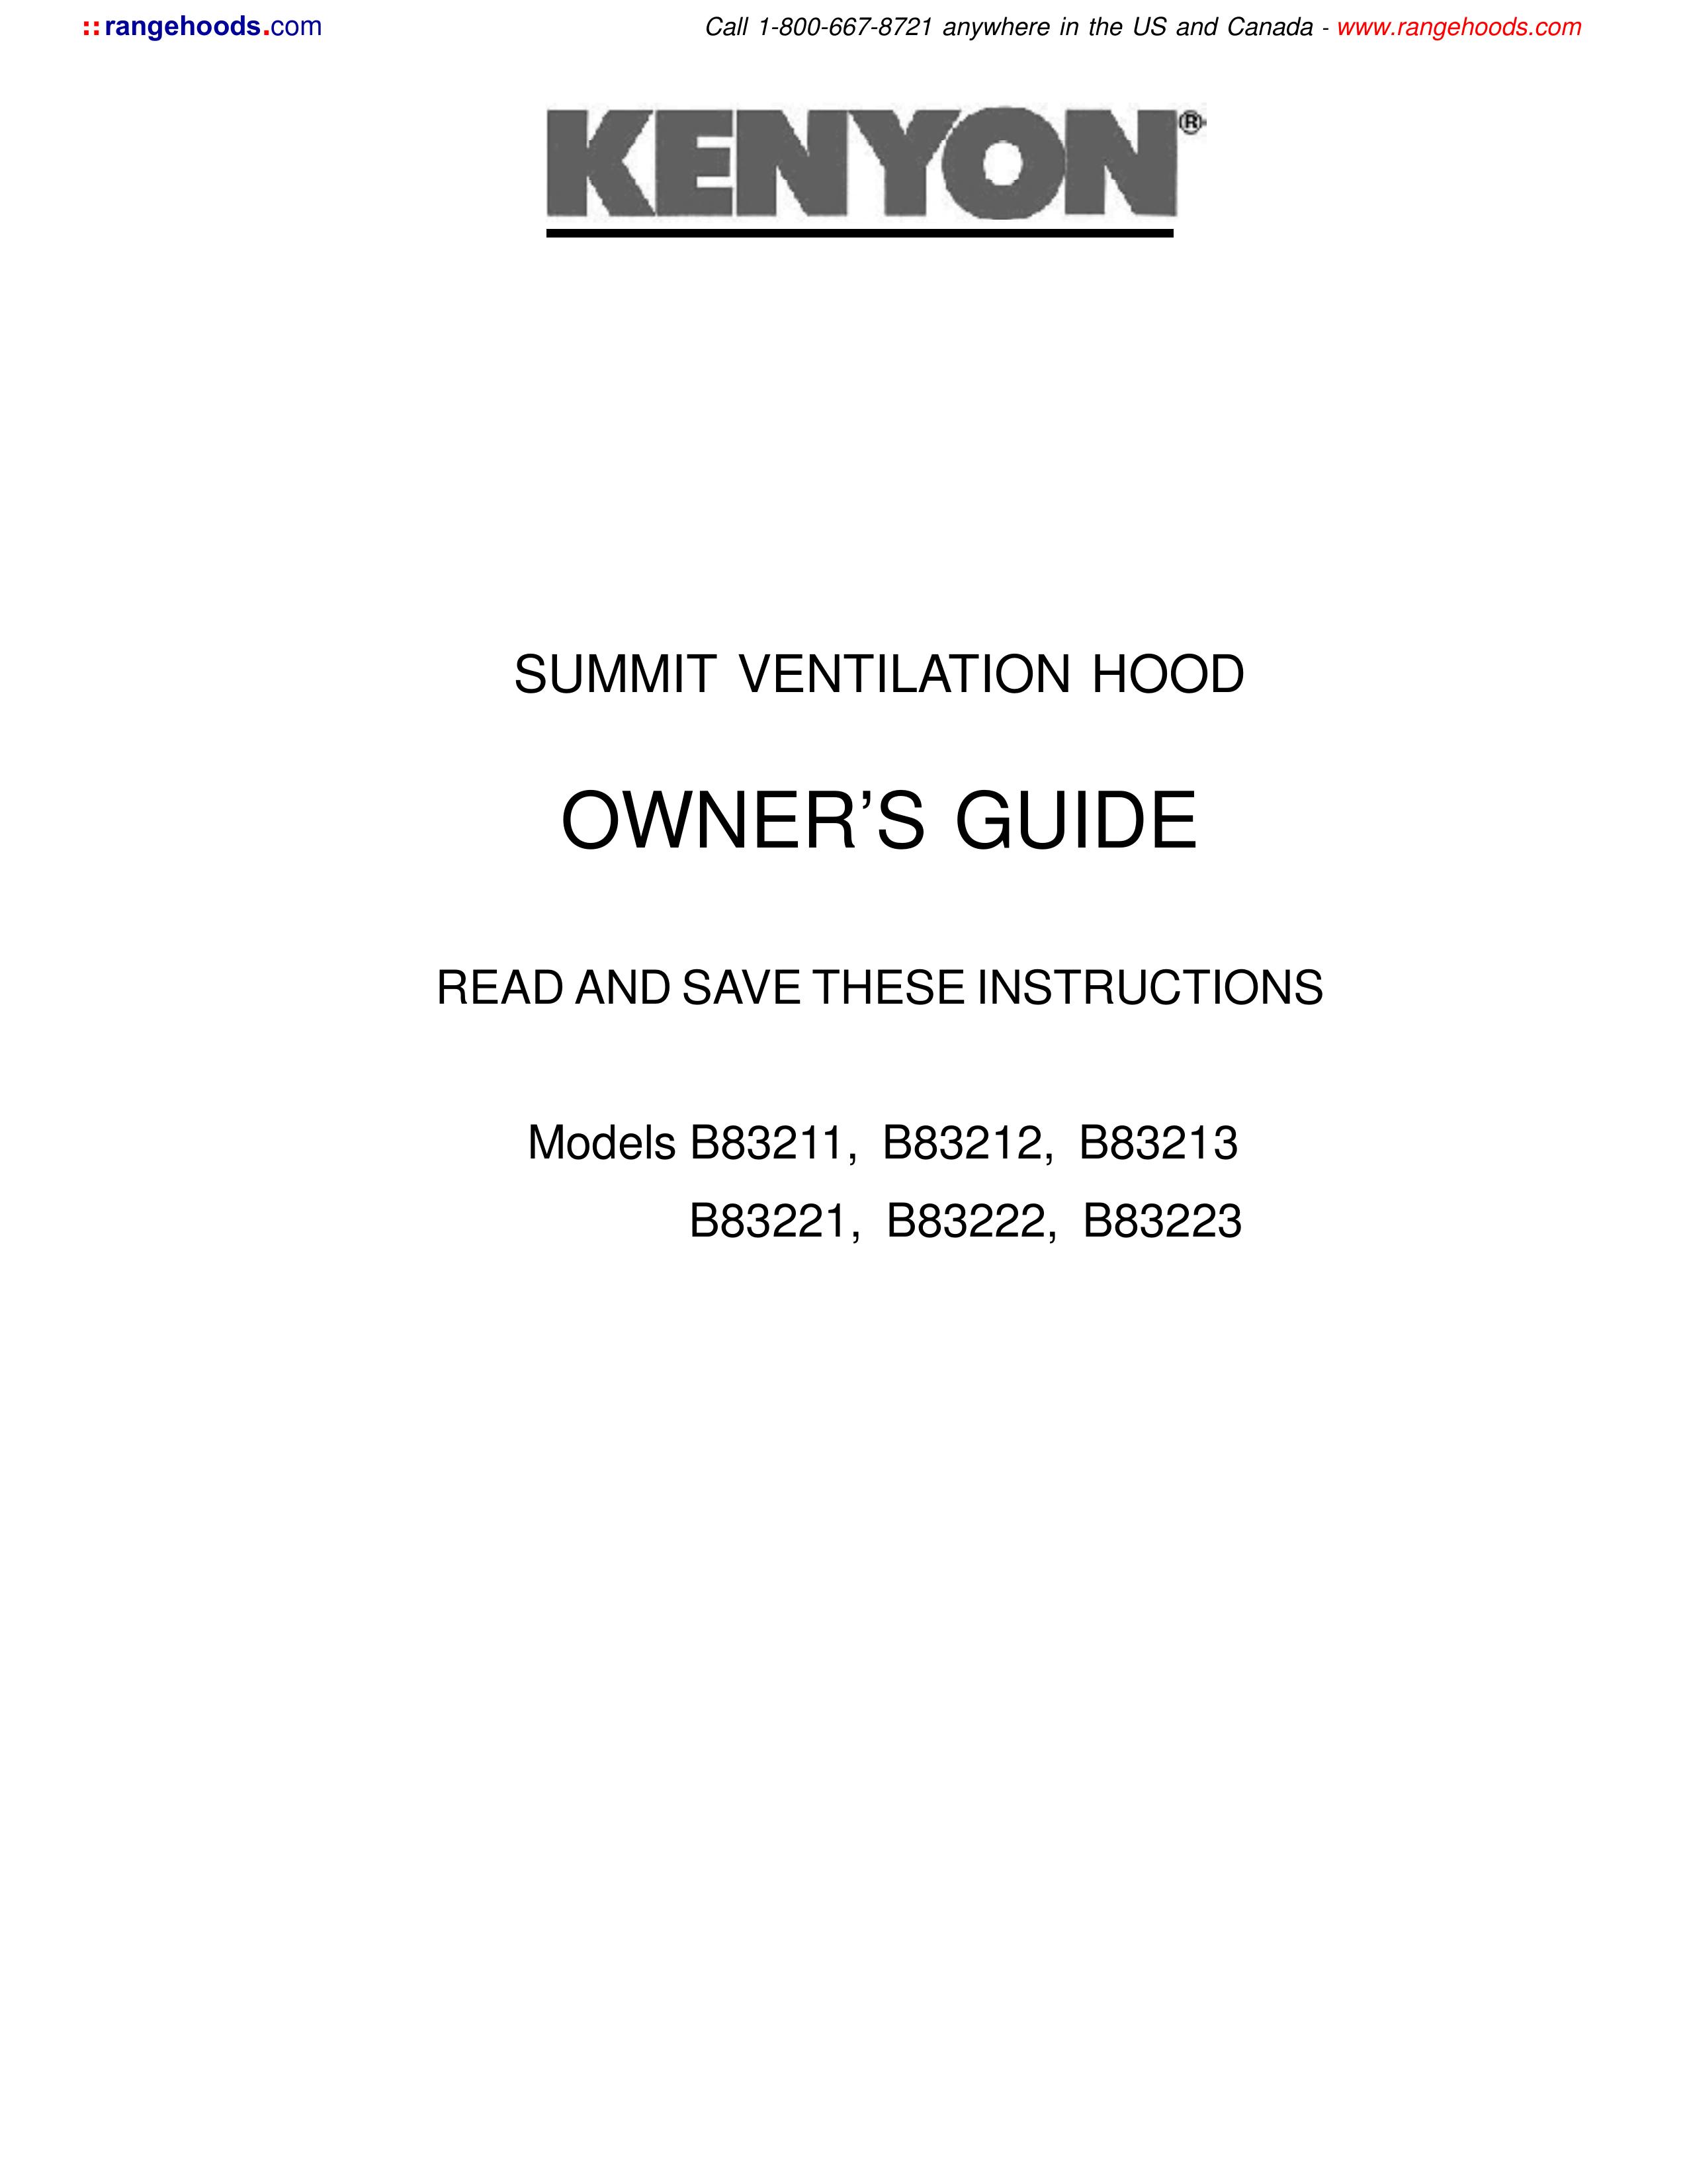 Kenyon B83221 Ventilation Hood User Manual